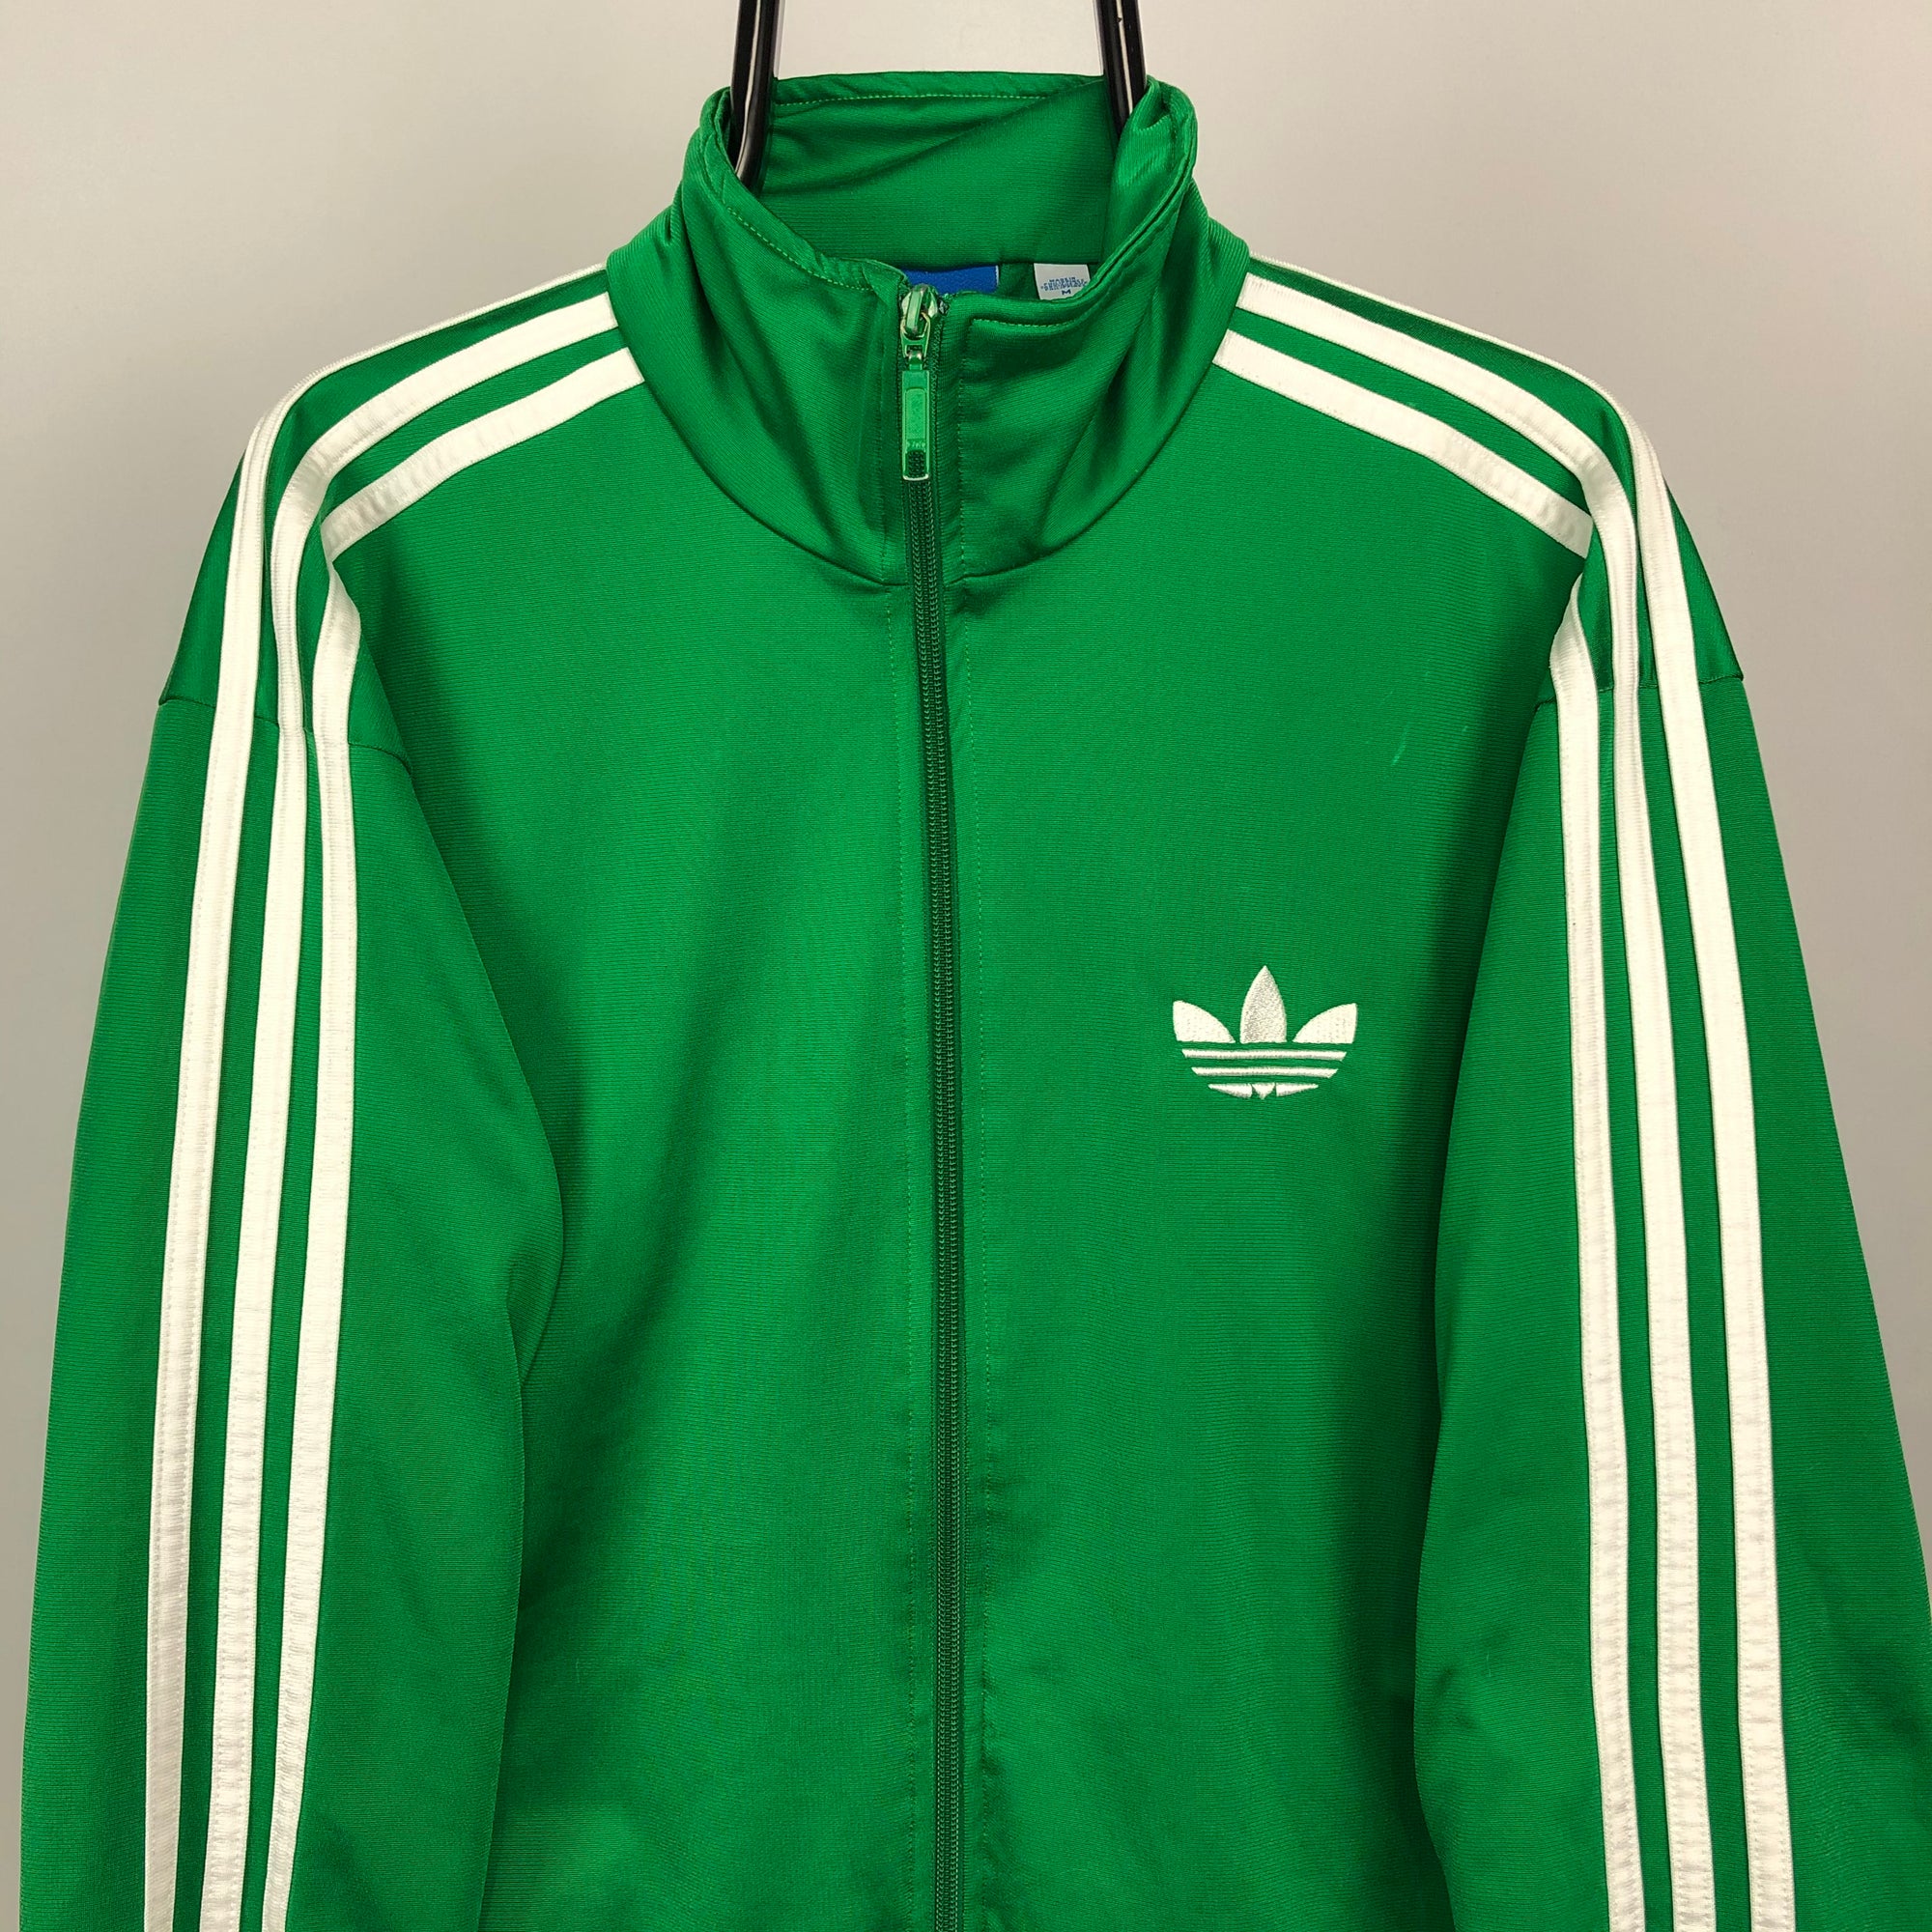 Adidas Originals Track Jacket in Green - Men's Medium/Women's Large